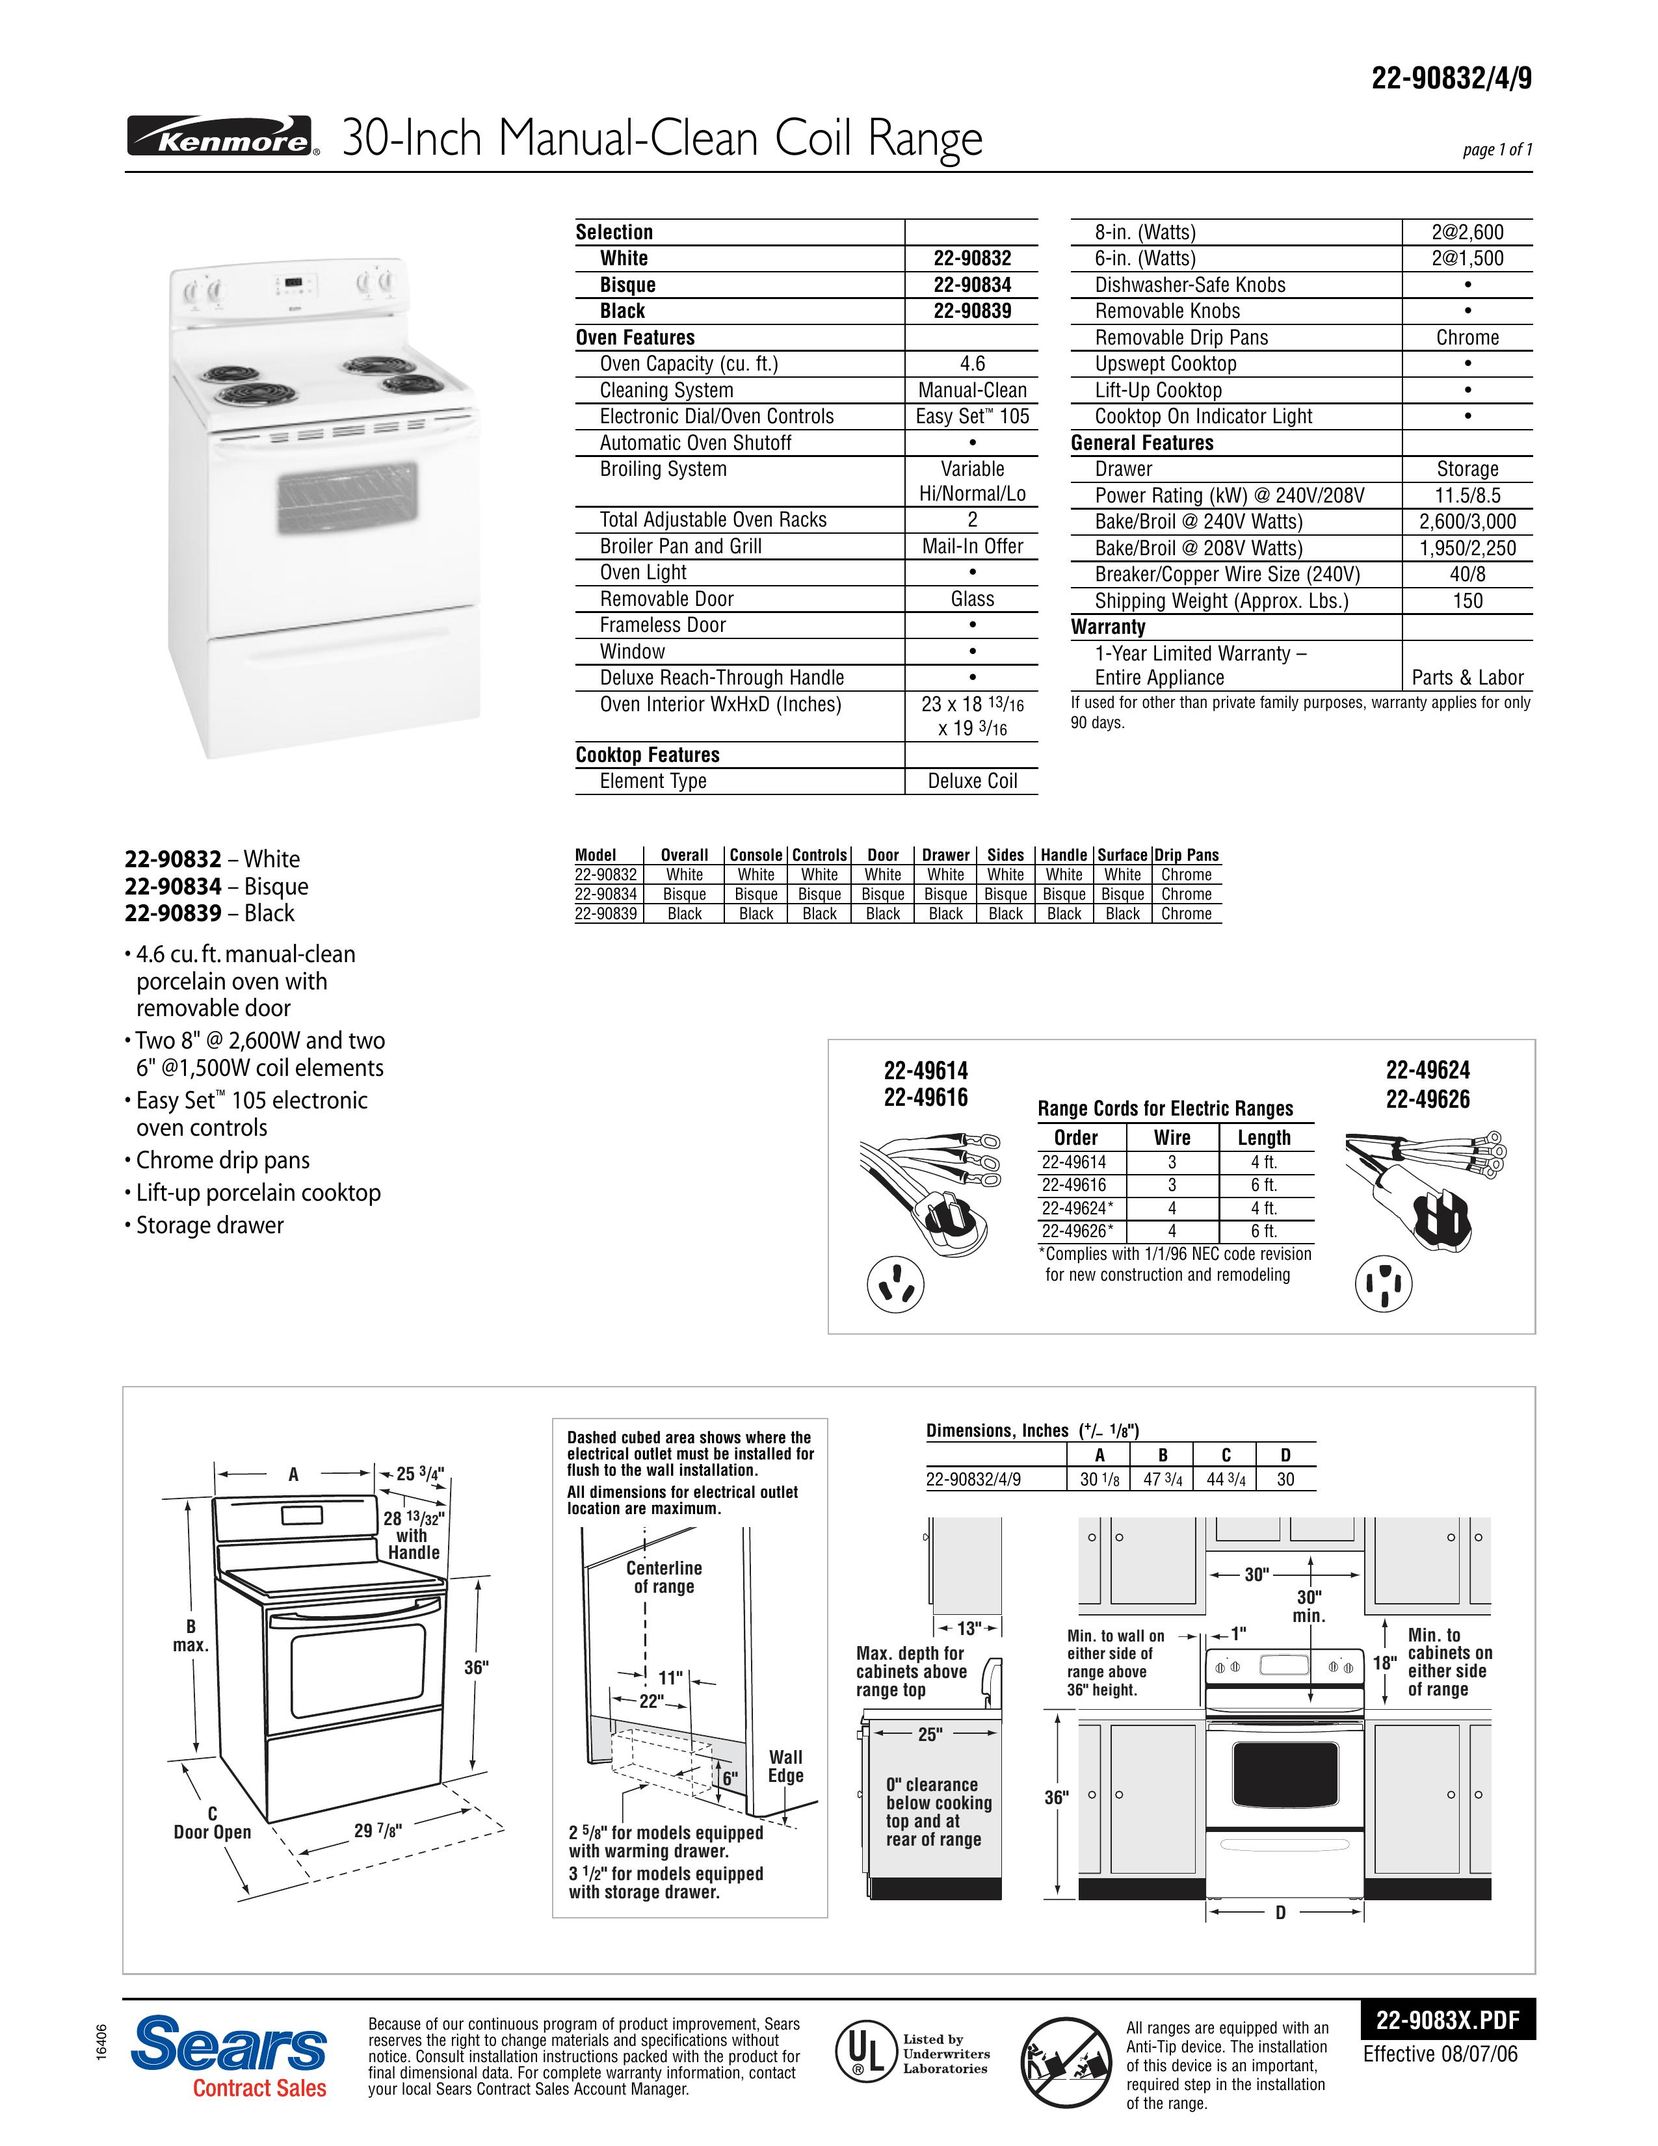 Sears 22-90834 Range User Manual